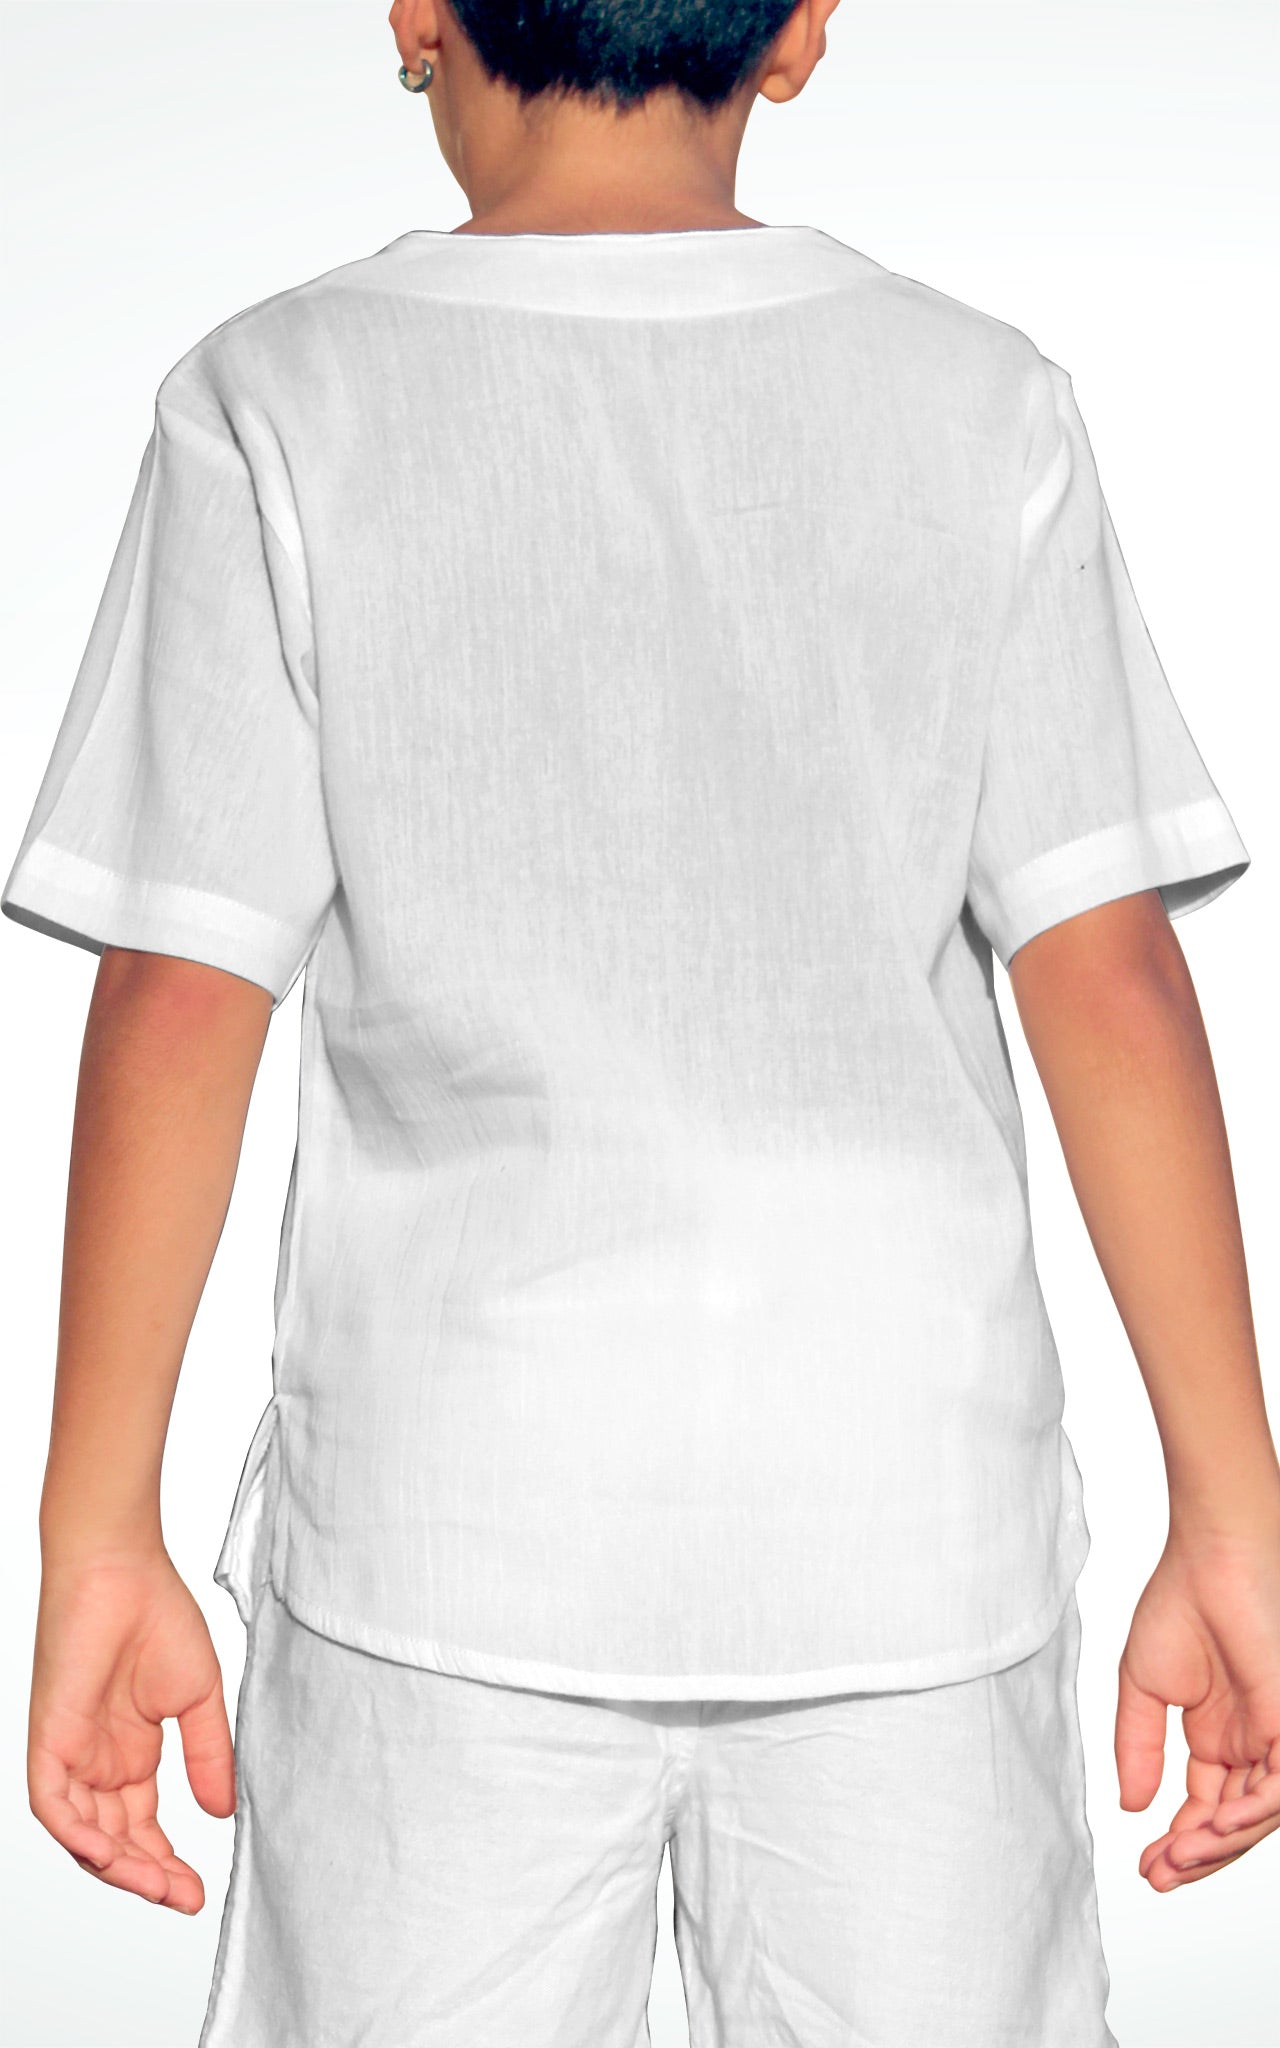 Boys' Lace Up Short Sleeve White Cotton T-Shirt